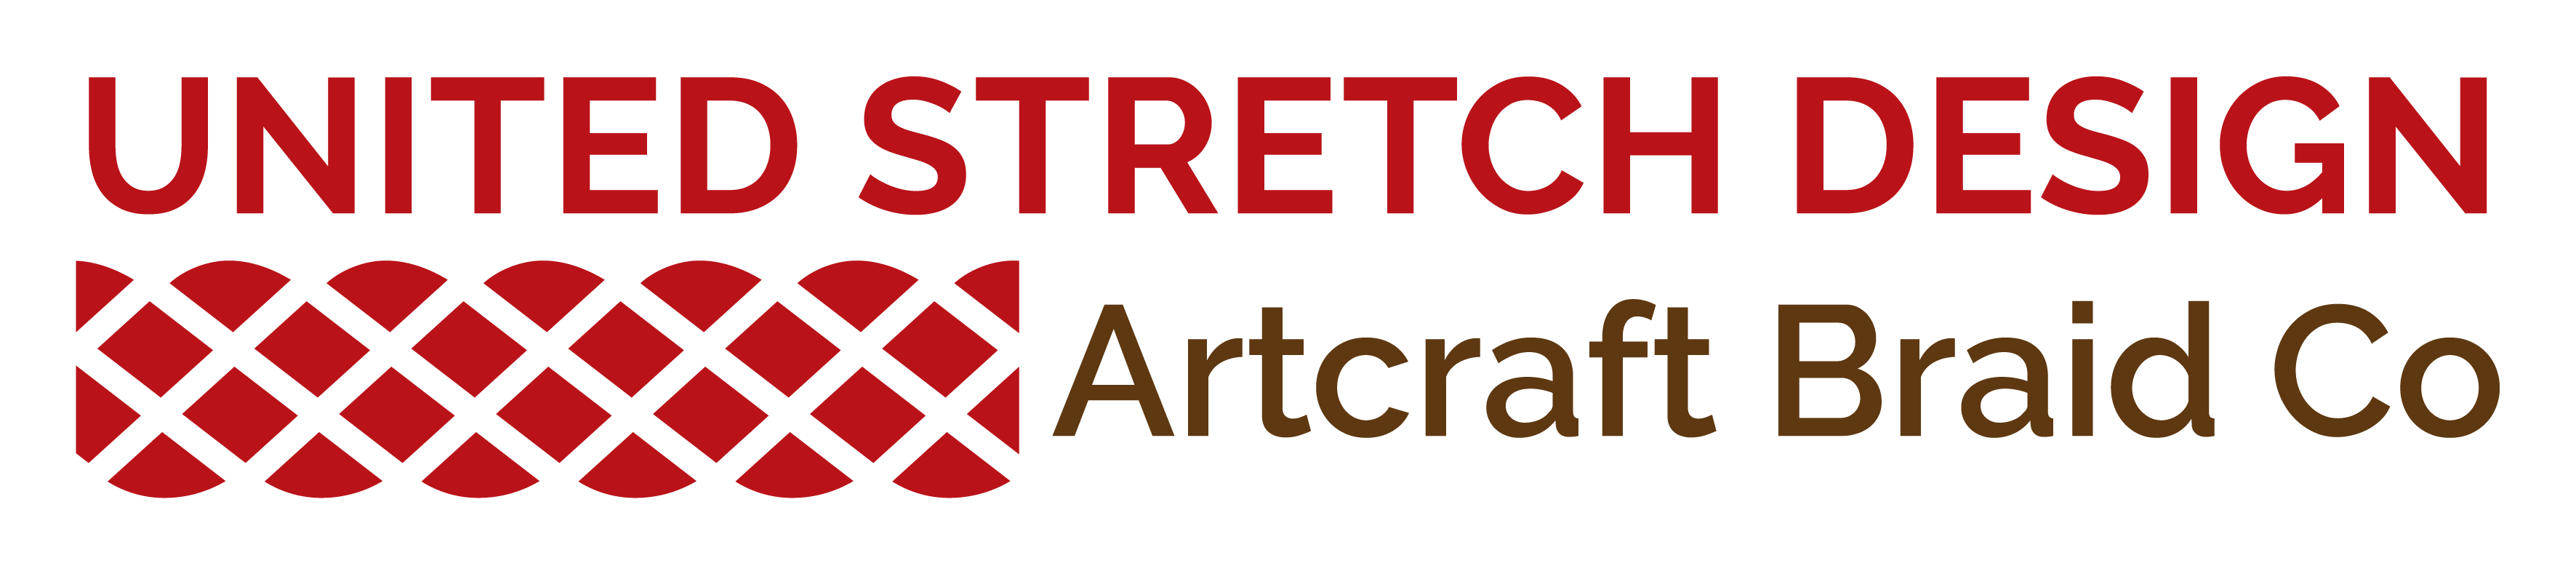 United Stretch Design / Artcraft Braid Co.